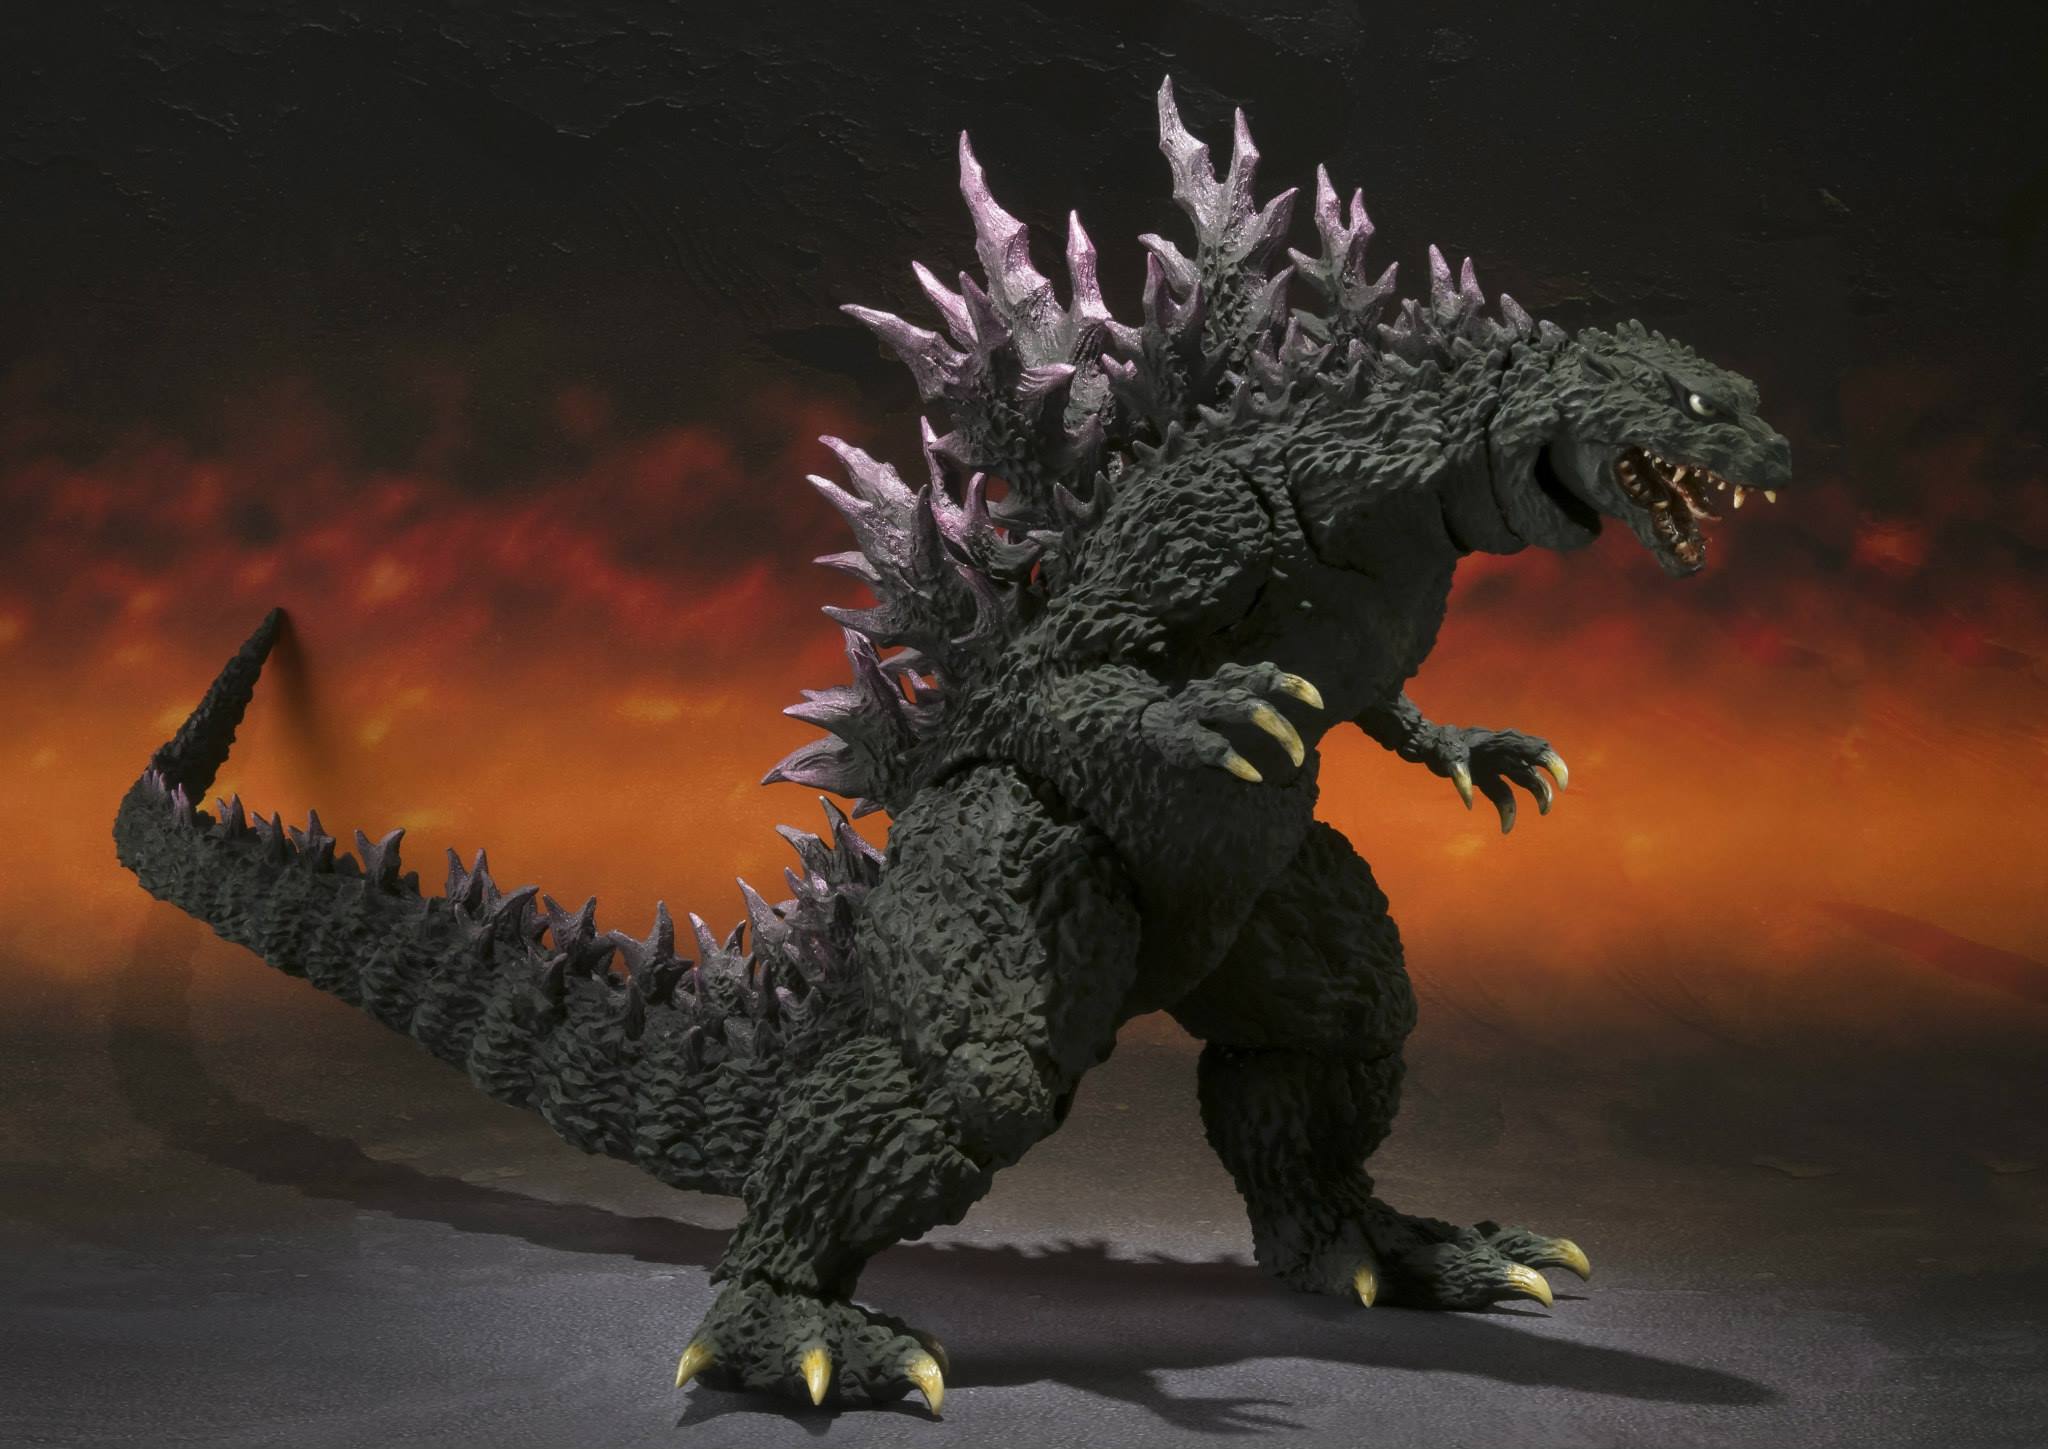 Godzilla 2000 Backgrounds on Wallpapers Vista